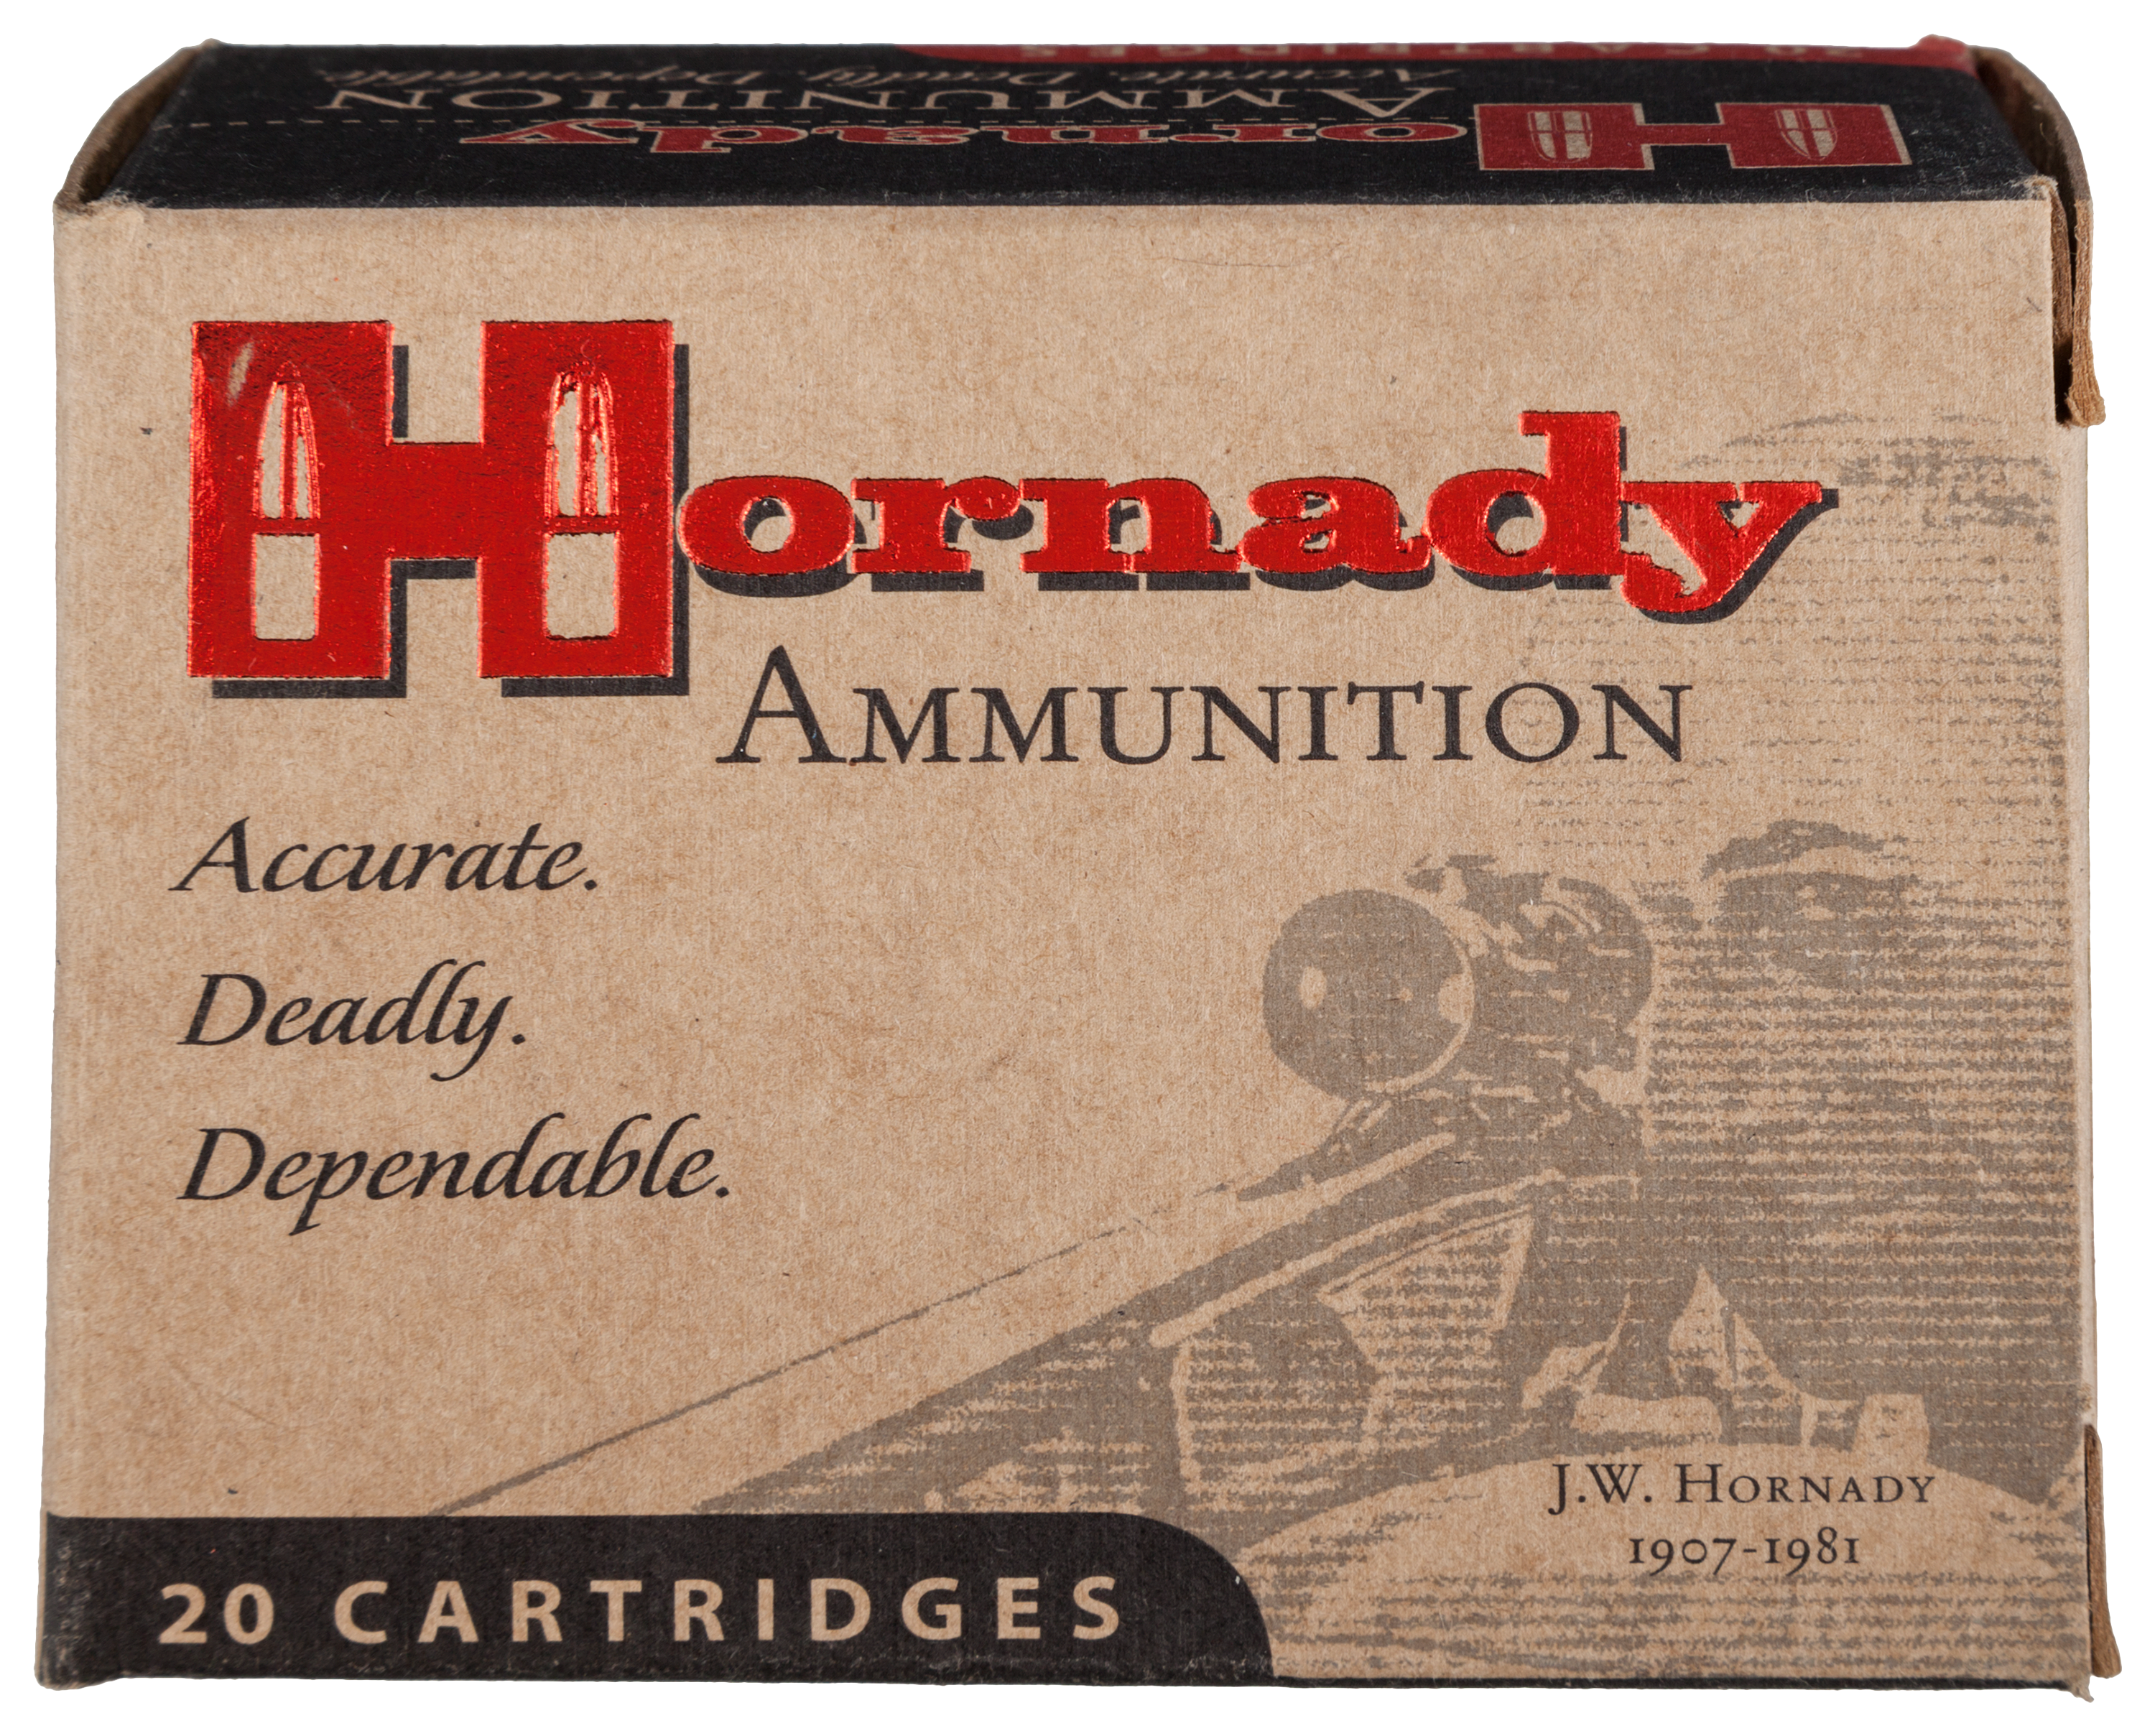 Premium 500 S&W Mag Ammo For Sale - 440 Grain Hard Cast Ammunition